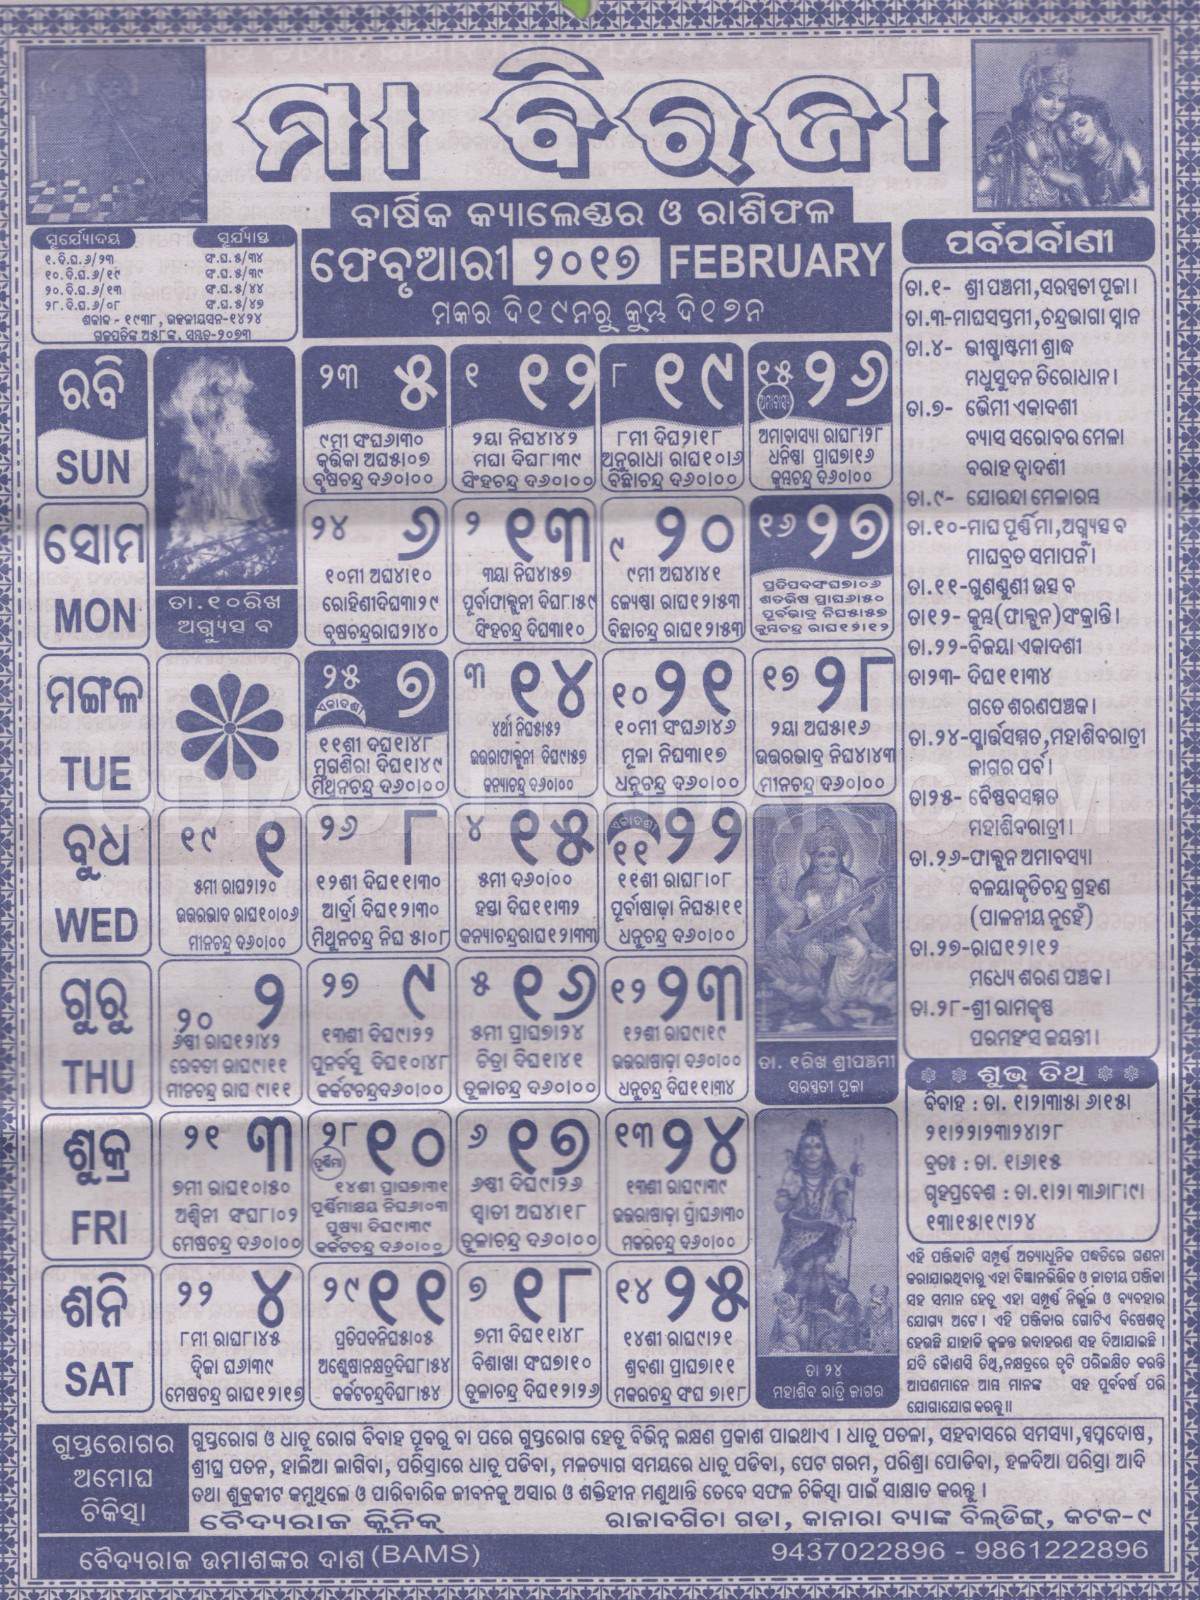 Biraja February 2017 Image